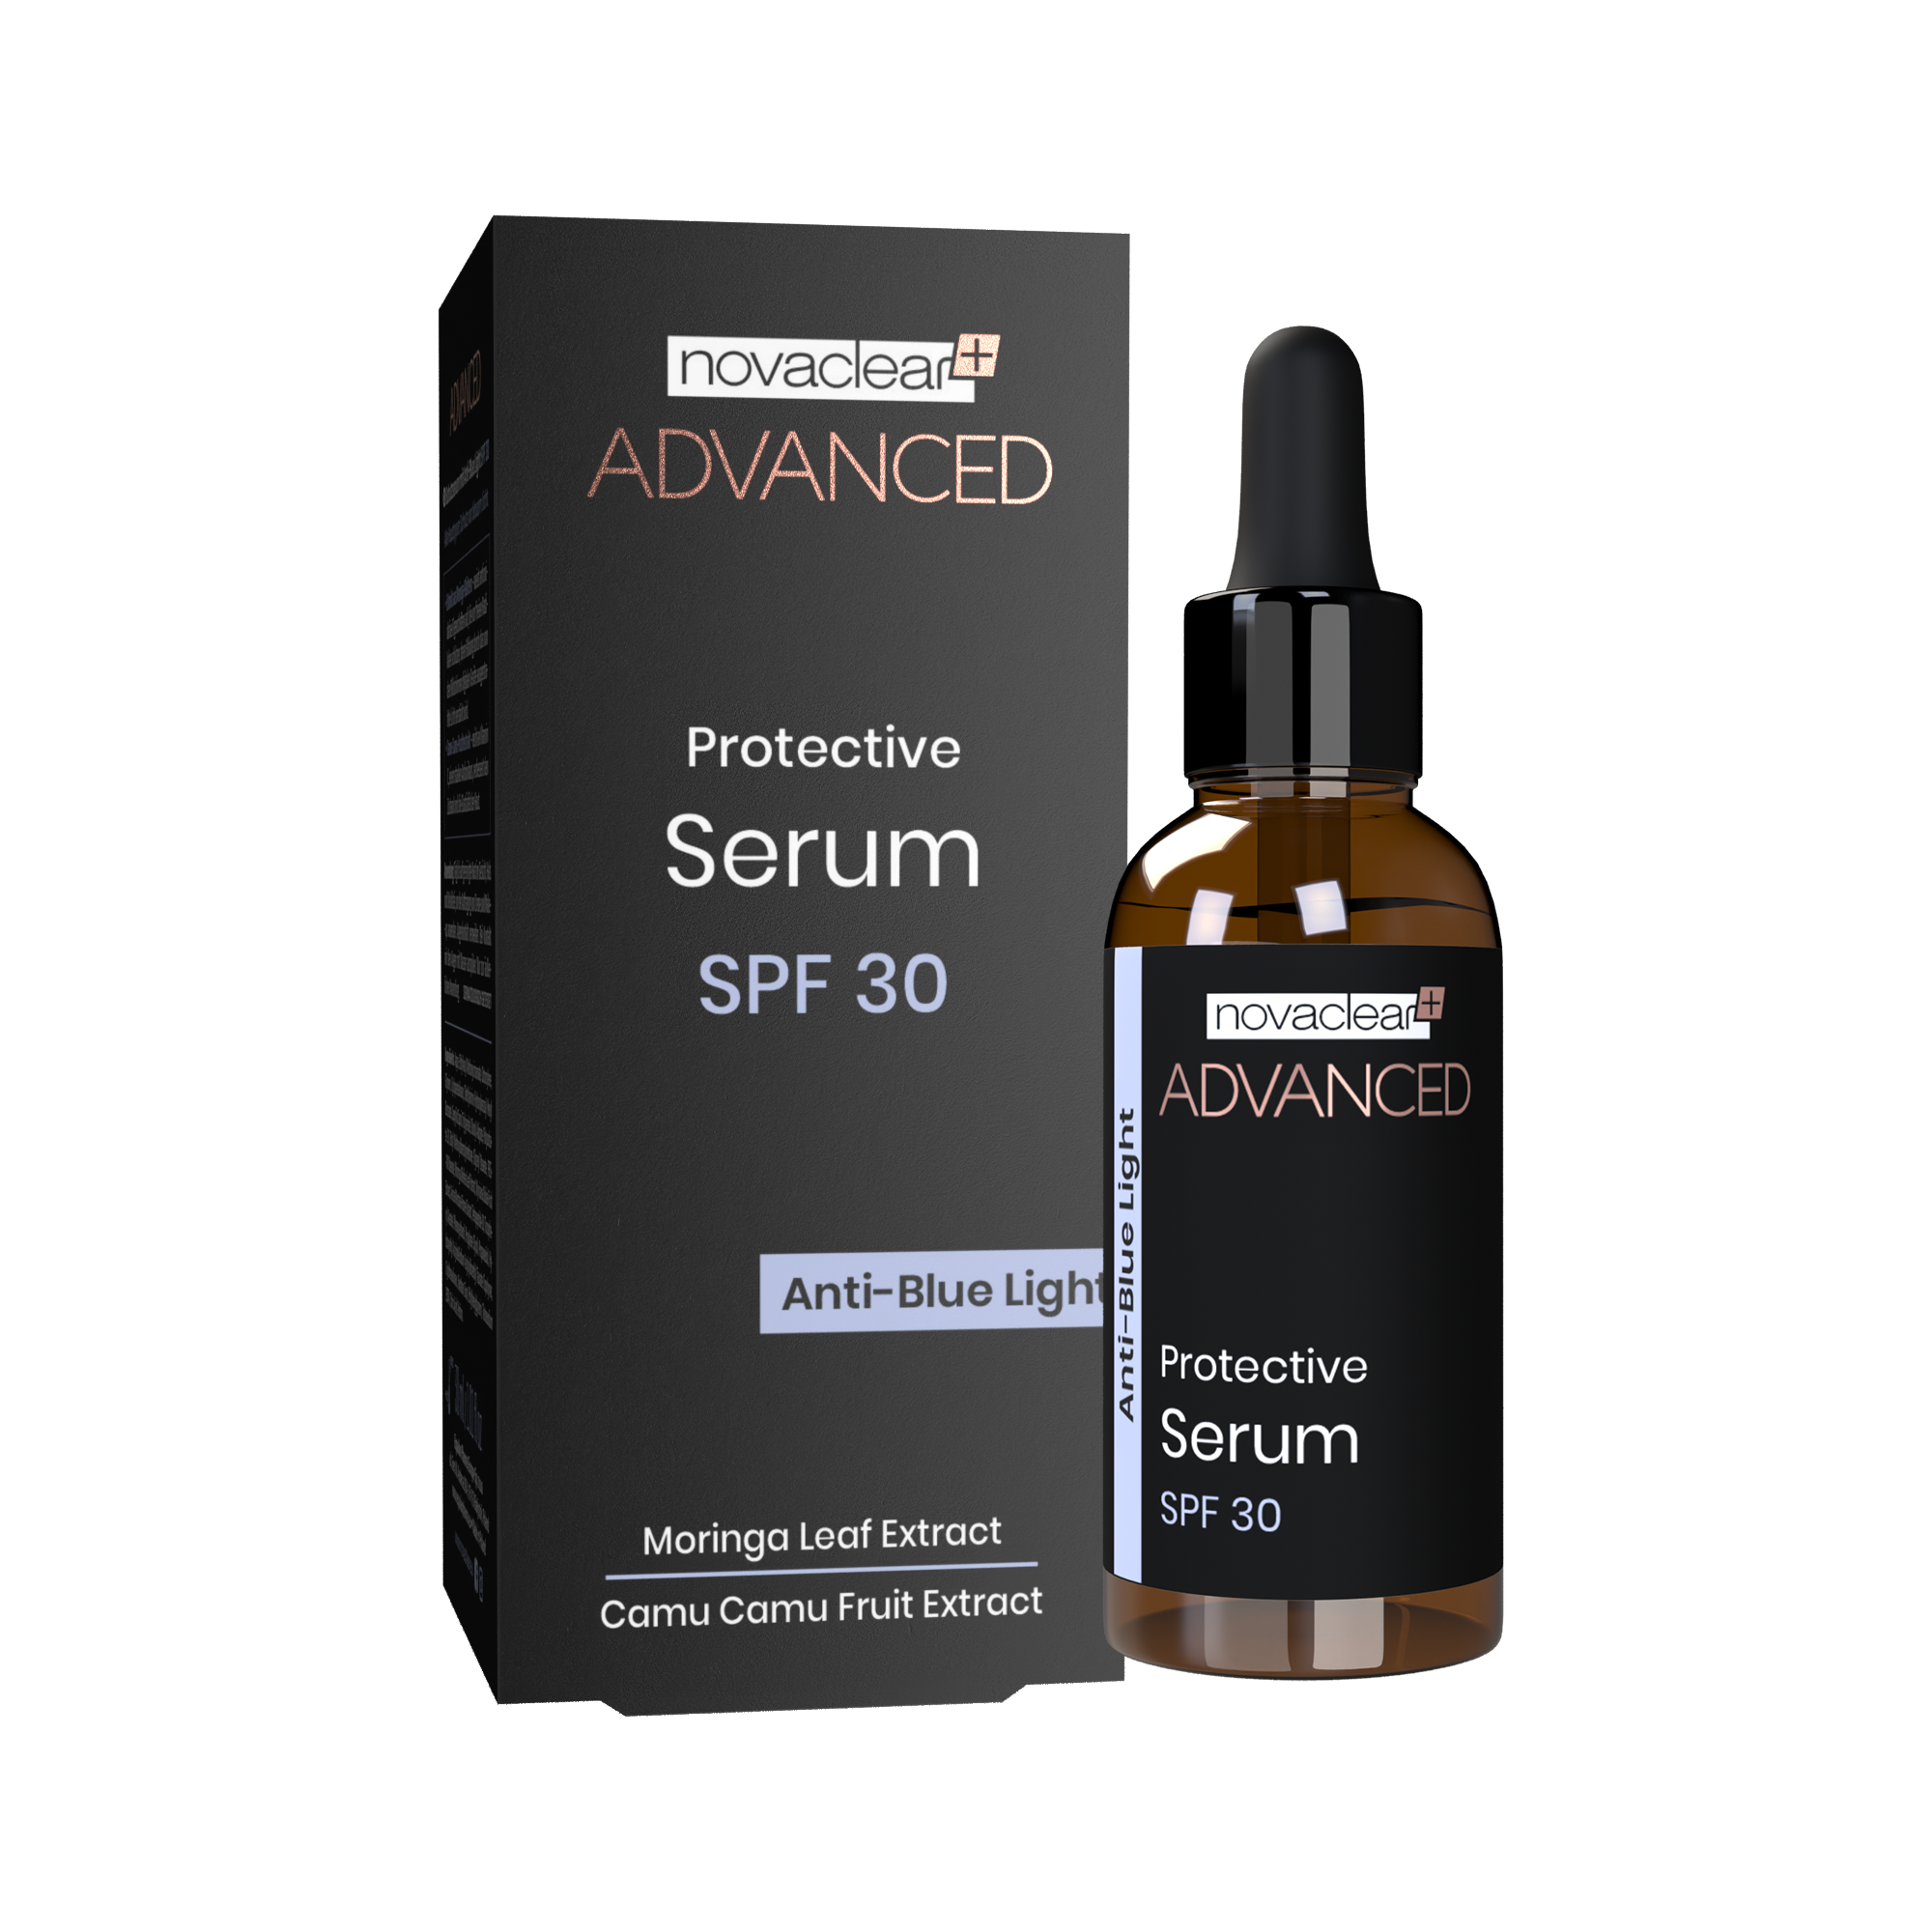 Advanced Protective Serum SPF 30